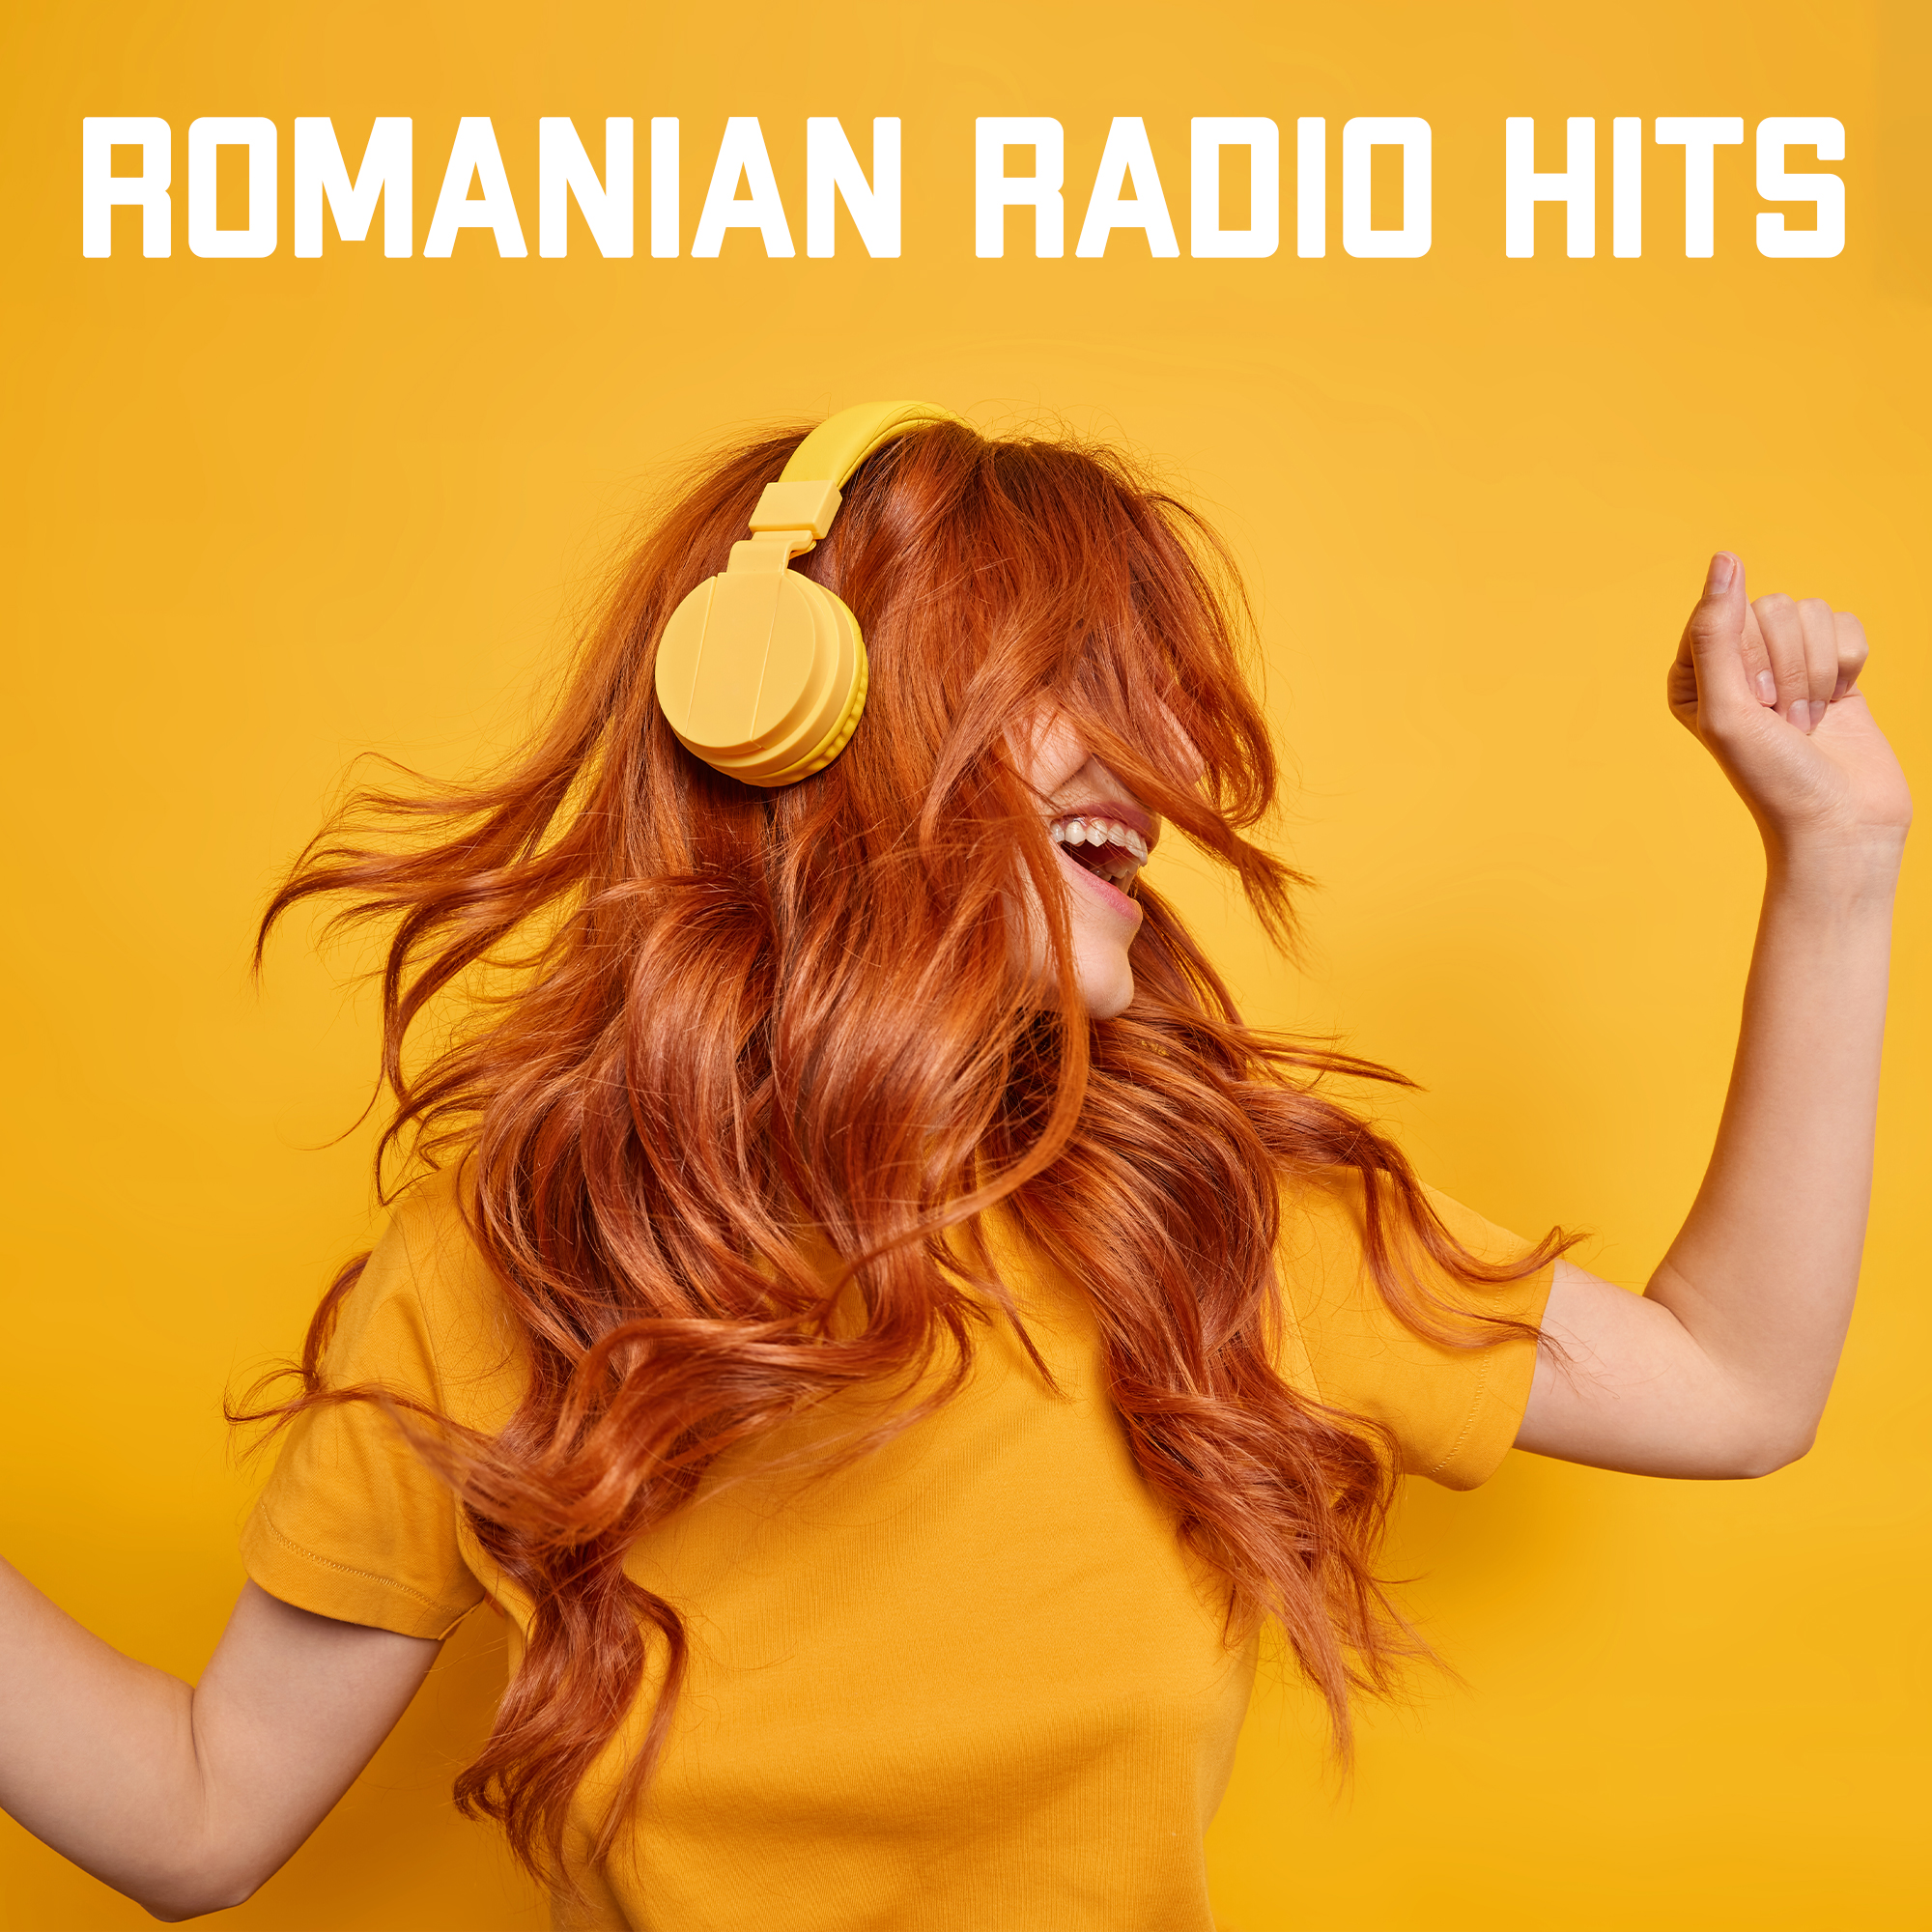 ROMANIAN RADIO HITS